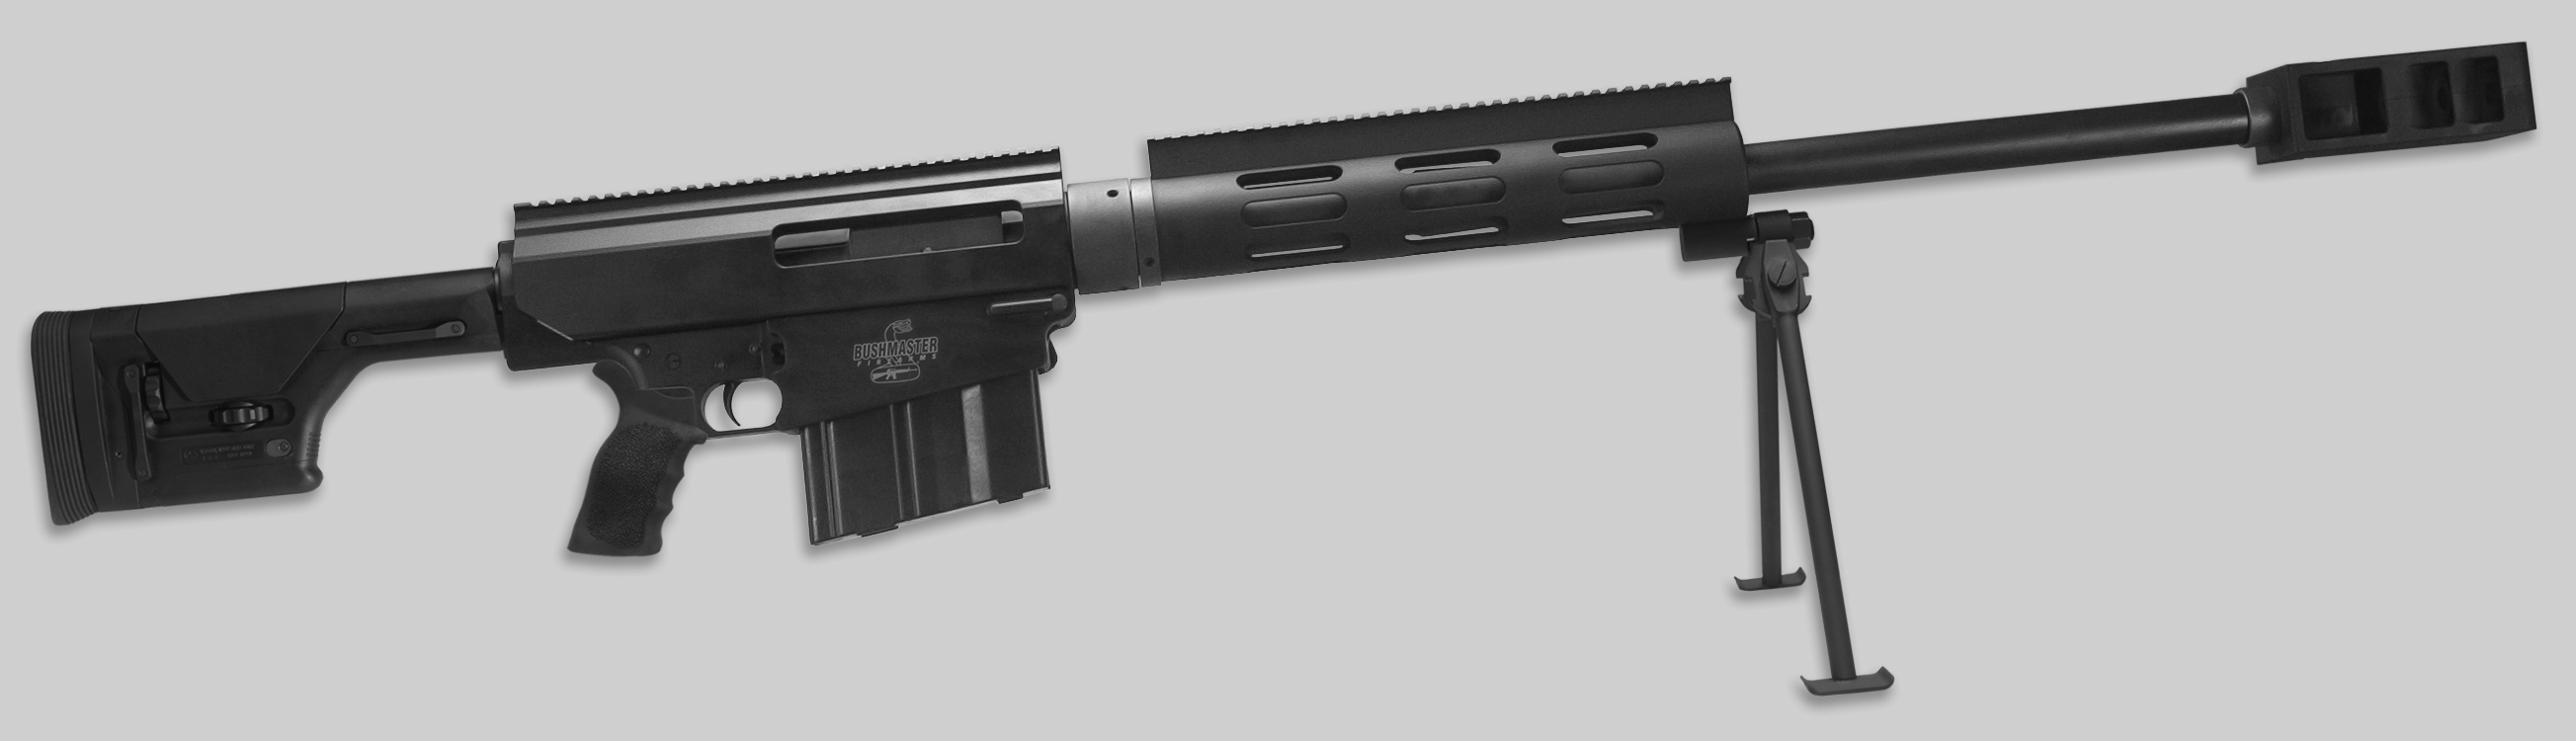 BA50 .50 BMG Rifle and Carbine